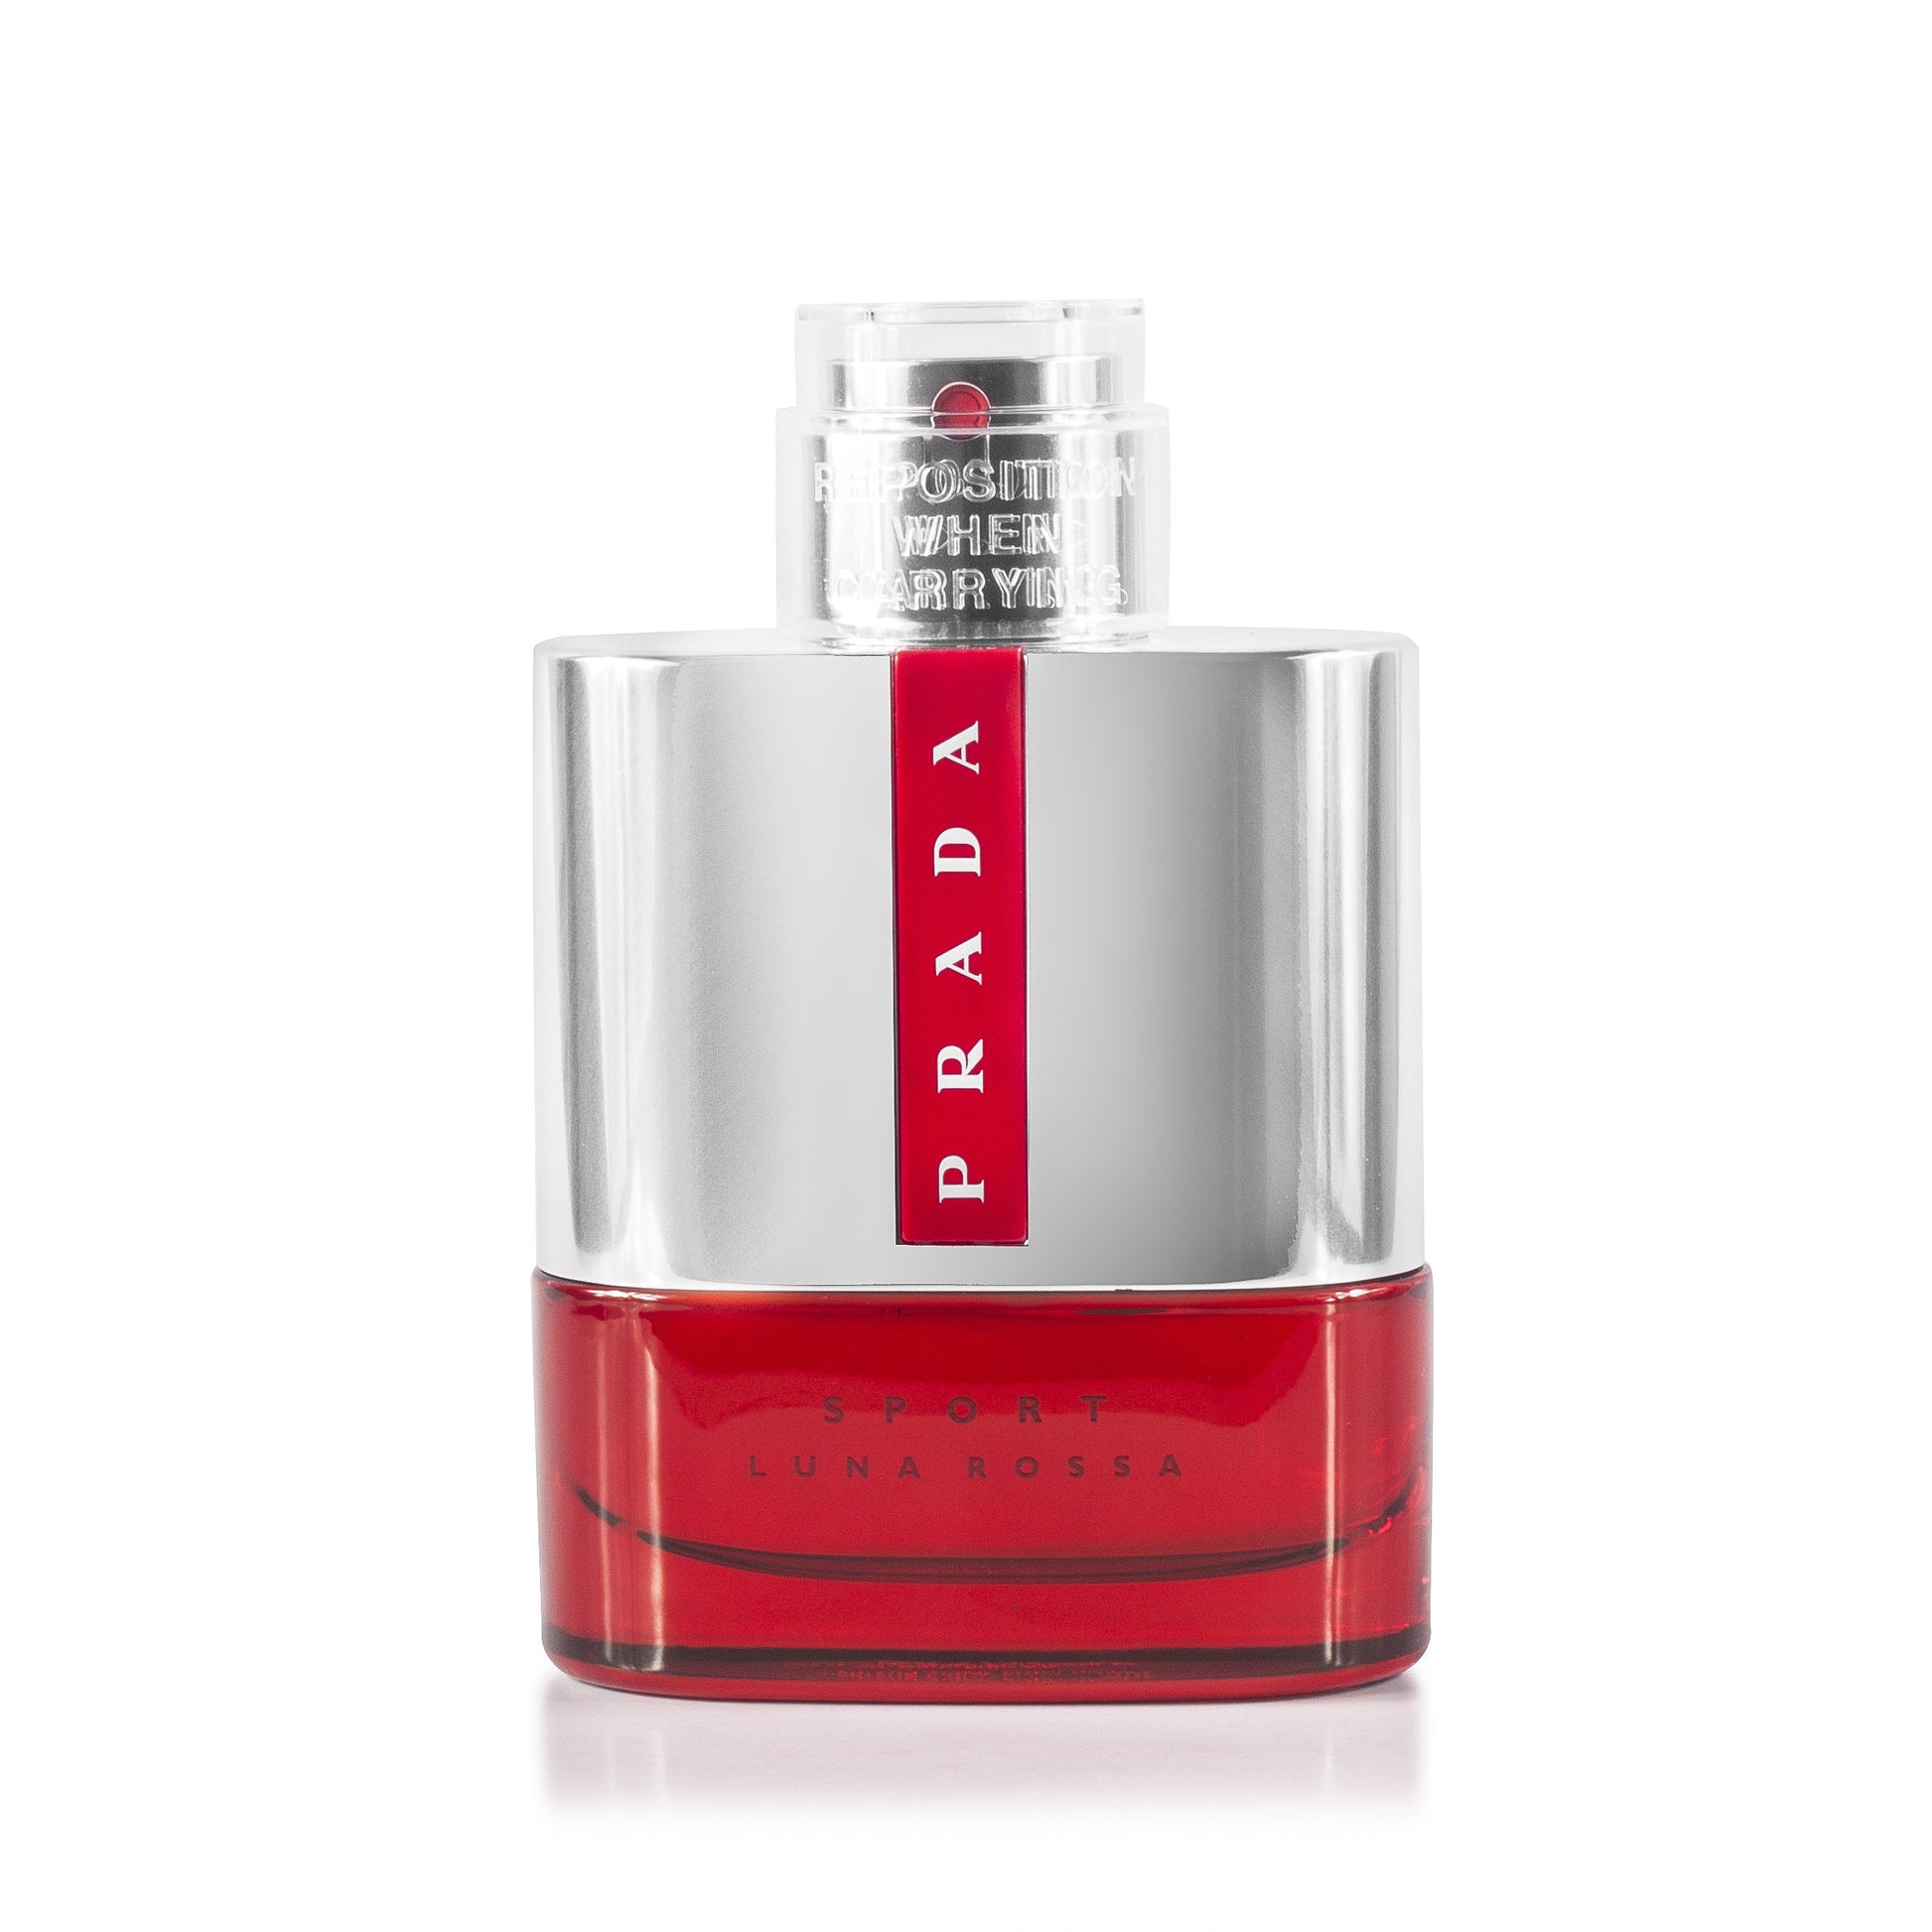 Luna Rossa Sport Eau de Toilette Spray for Men by Prada 3.4 oz. Click to open in modal